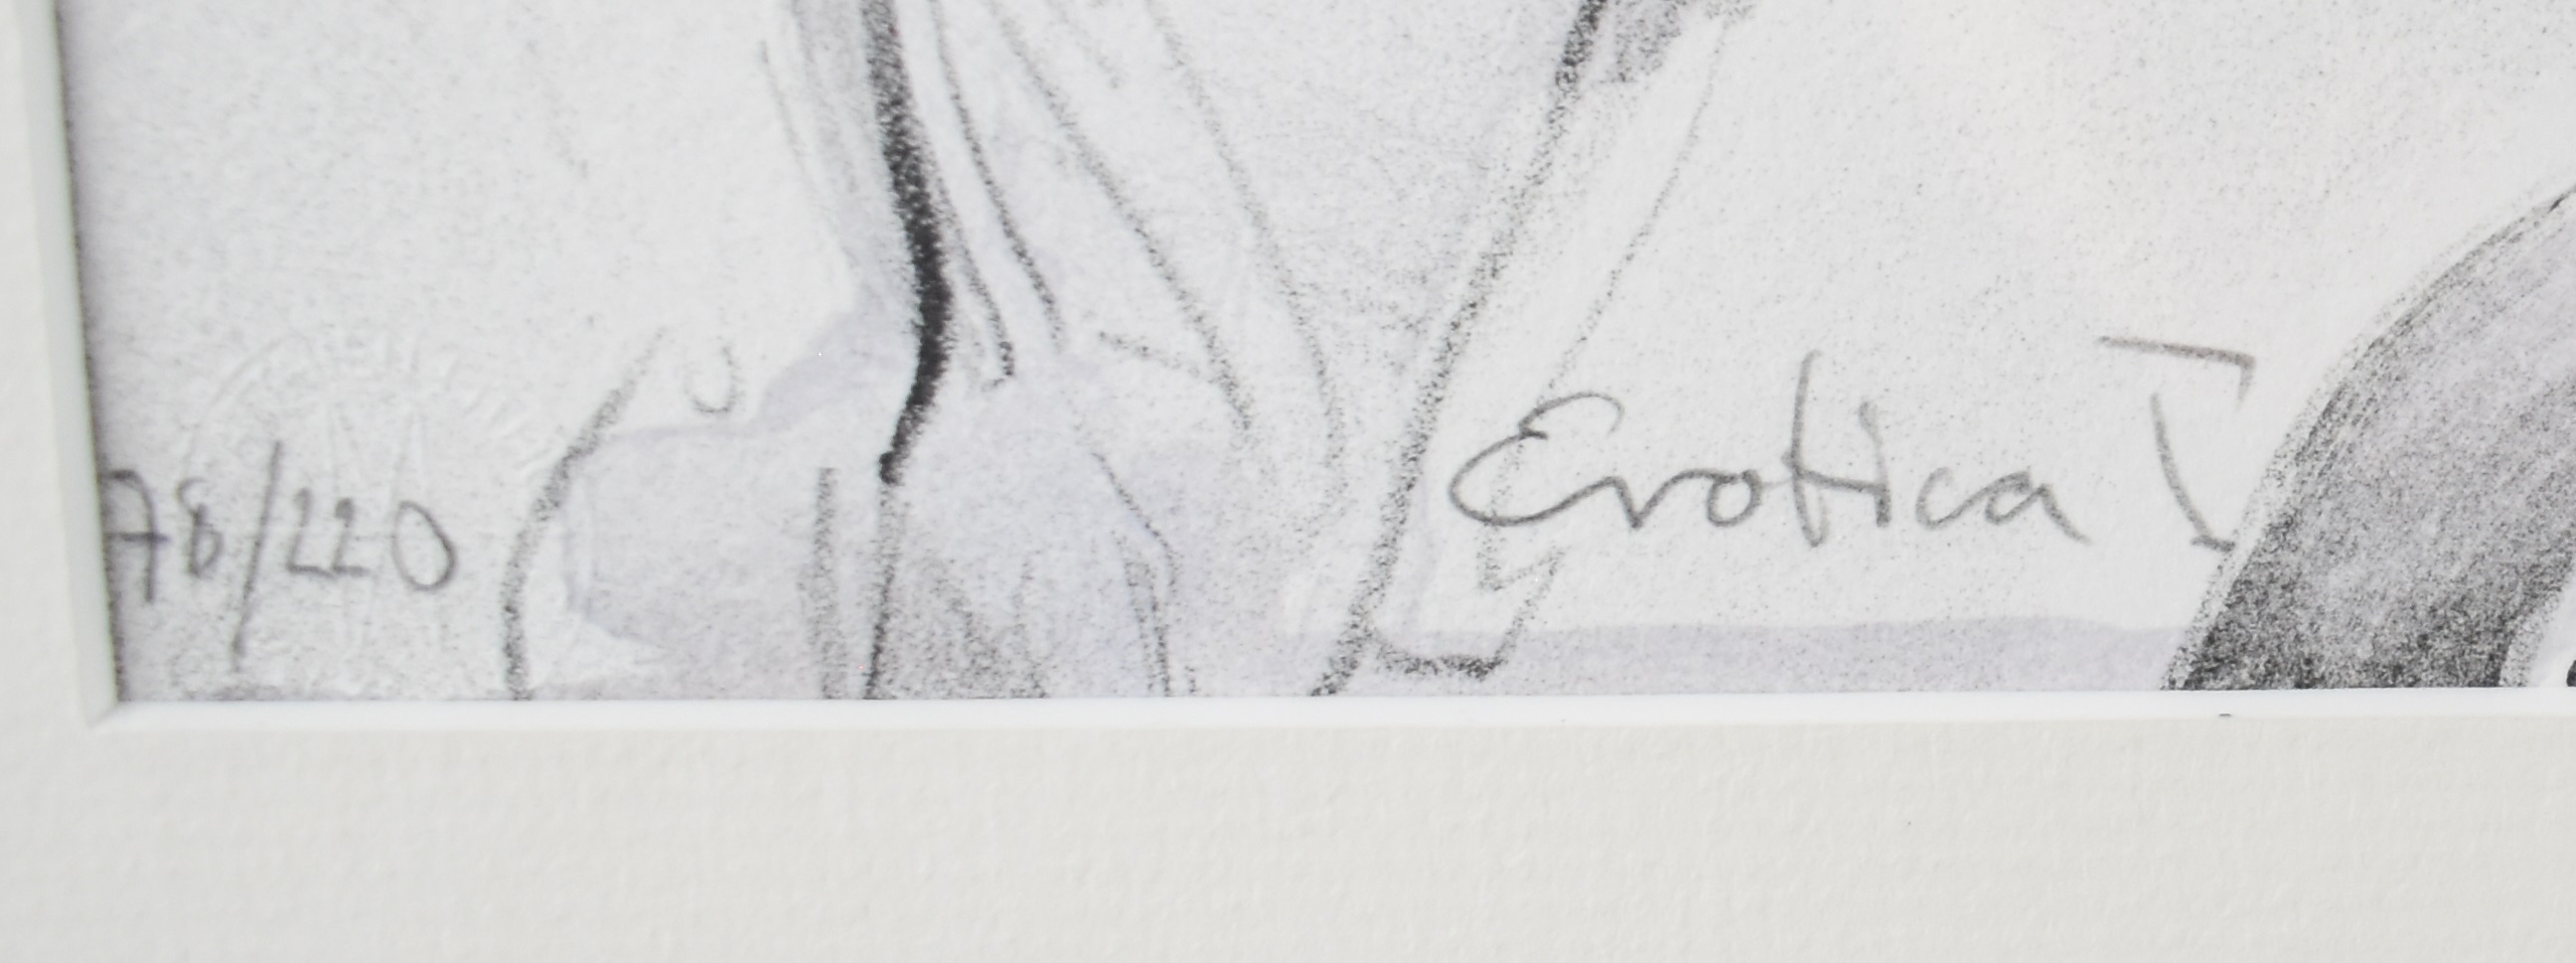 Jurgen Gorg (German, born 1951) signed limited edition (78/220) etching Erotica I, titled, - Image 3 of 4